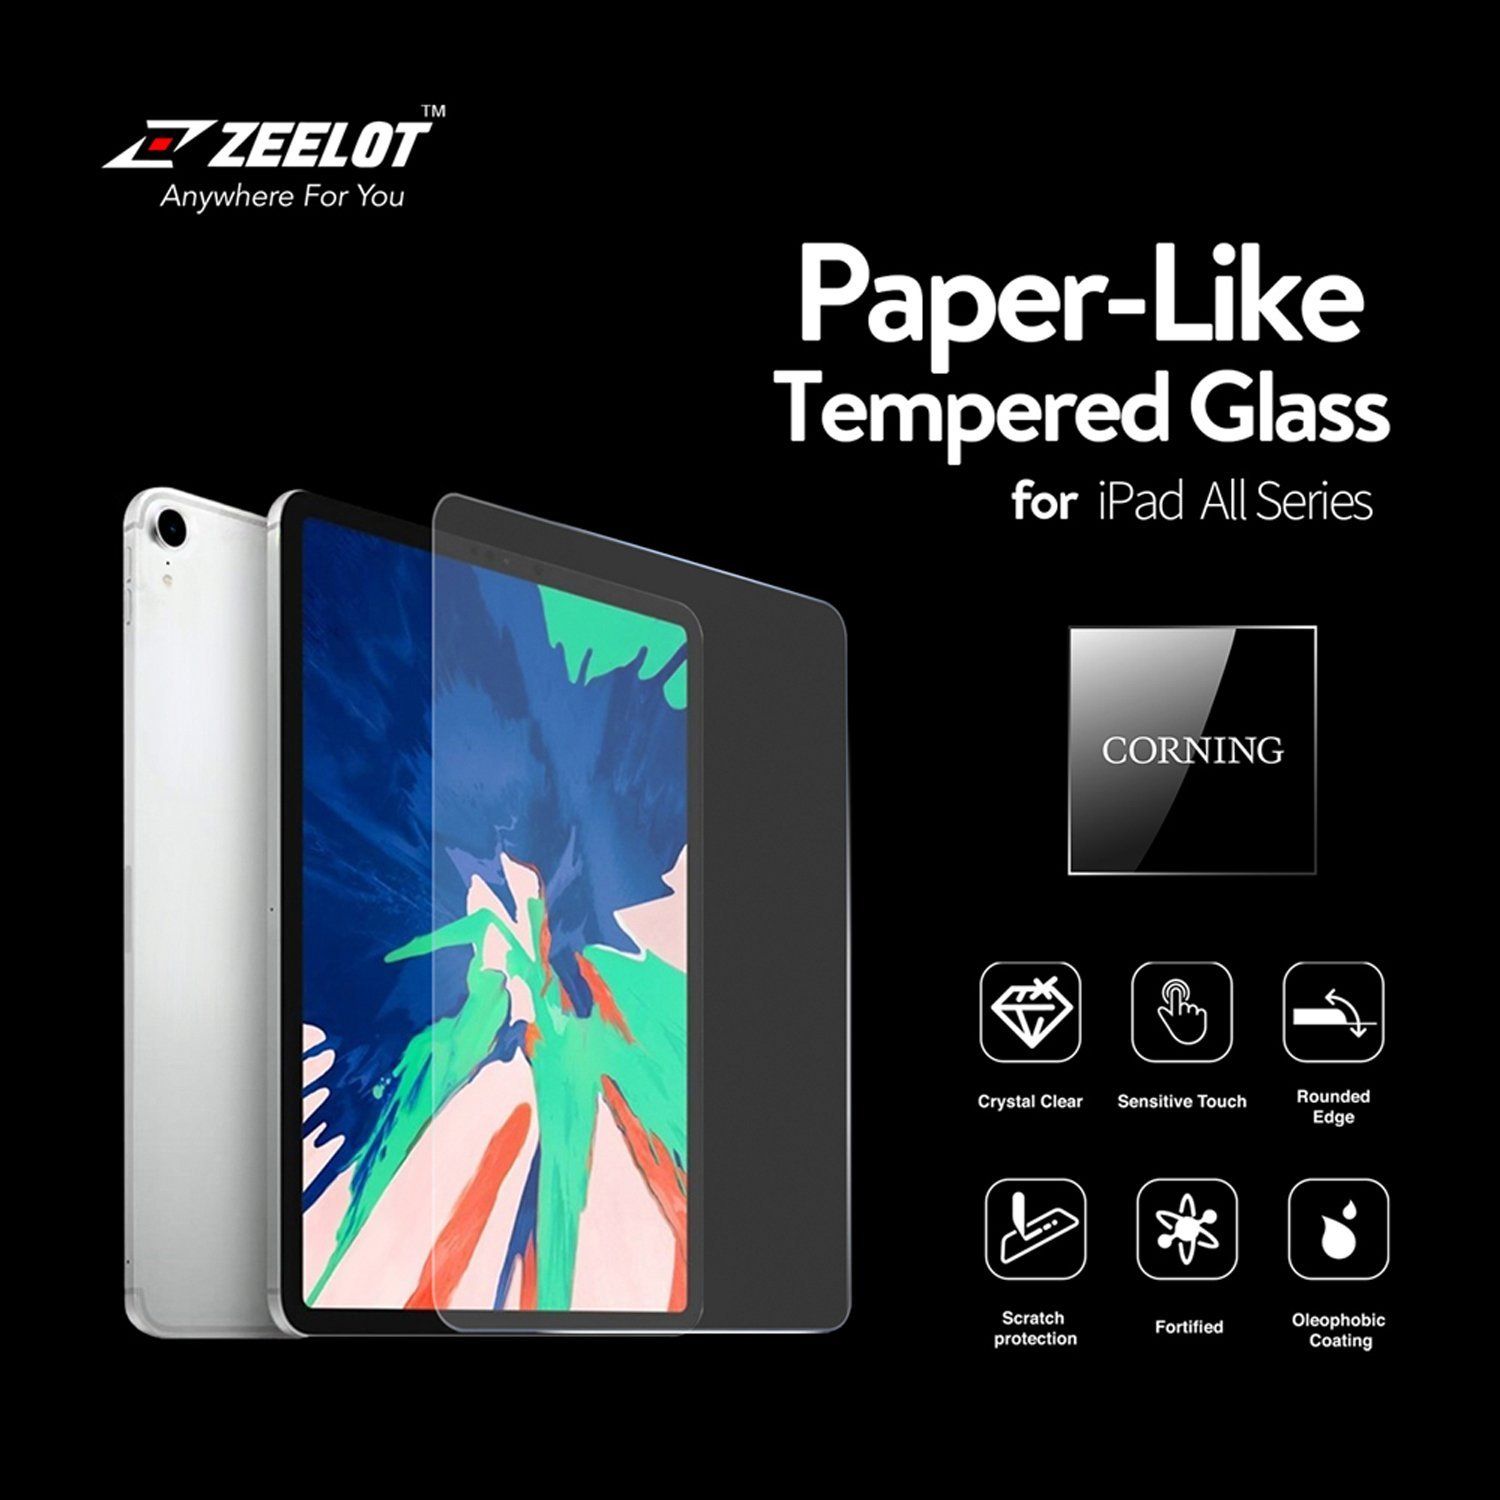 ZEELOT PureGlass 2.5D Tempered Glass Screen Protector for iPad Mini 5/4 7.9" (2019/2015), Clear Tempered Glass ZEELOT 